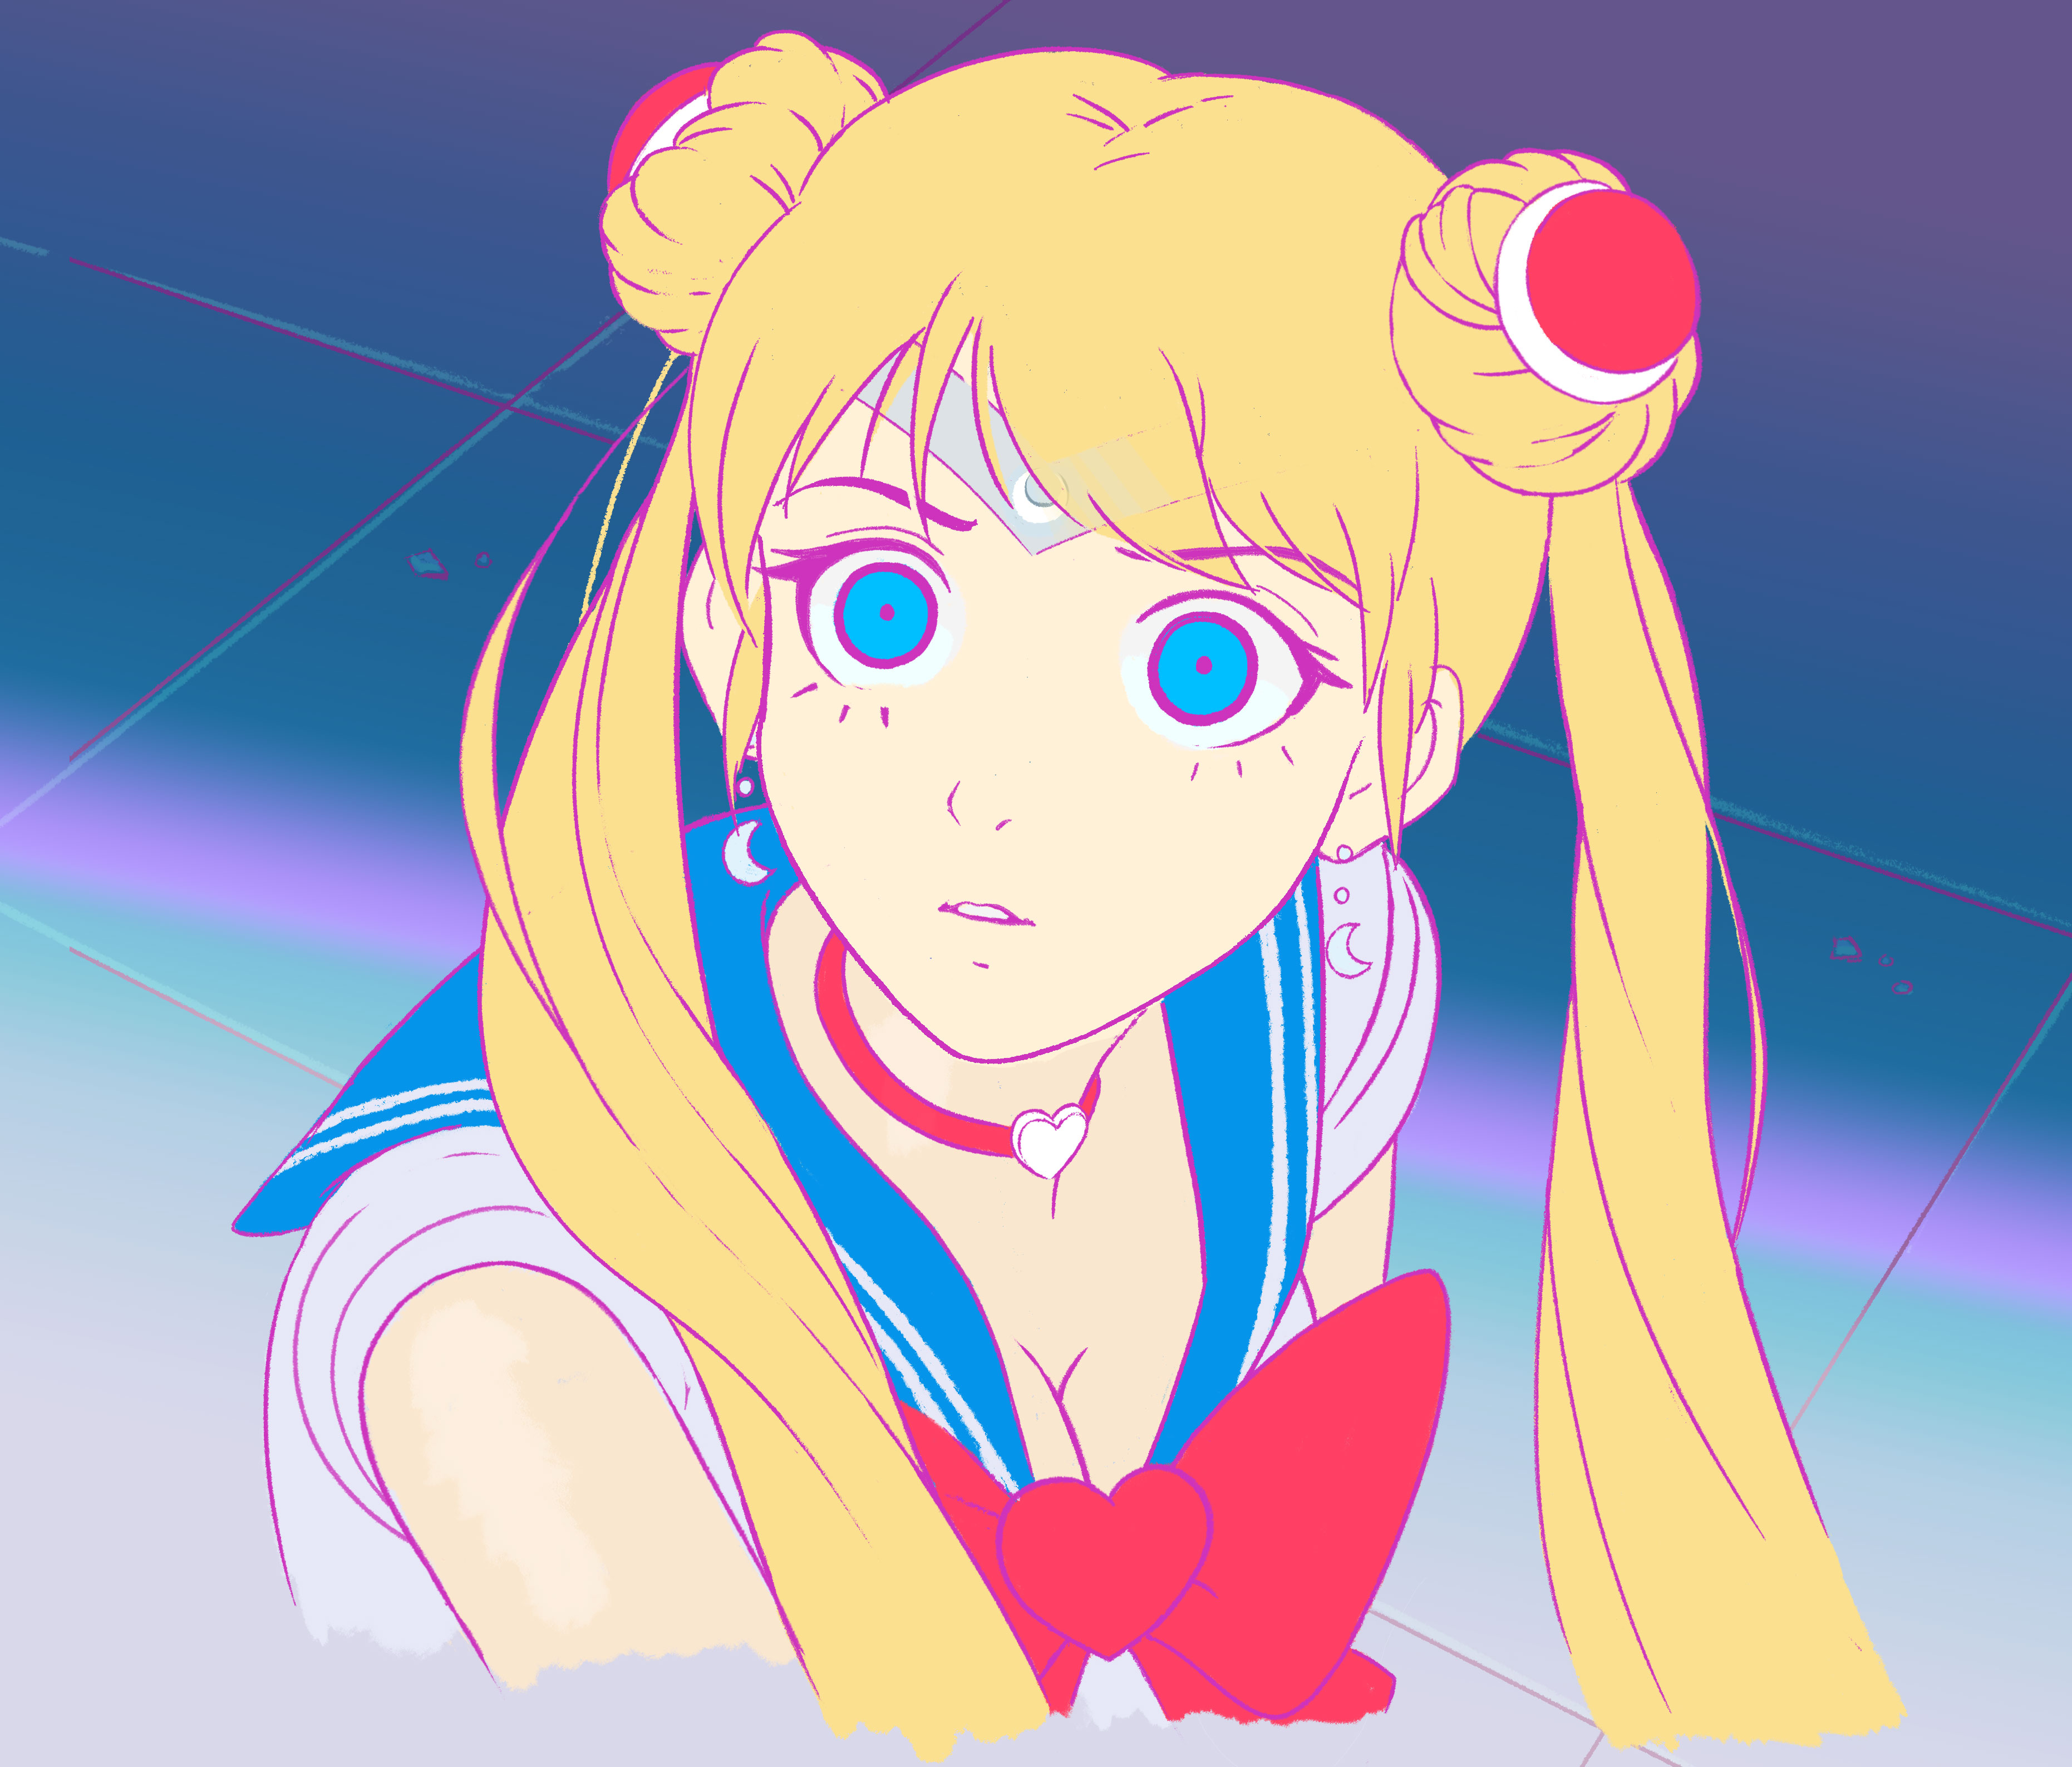 Kenji Omura My Intent For Sailormoonredraw Sailormoon セーラームーン Illustration Digitalart Illustracion イラスト デジタルイラスト デジタルアート かわいい 可愛い Cute Anime Animeart Animegirl Mangagirl Kawaii 90s